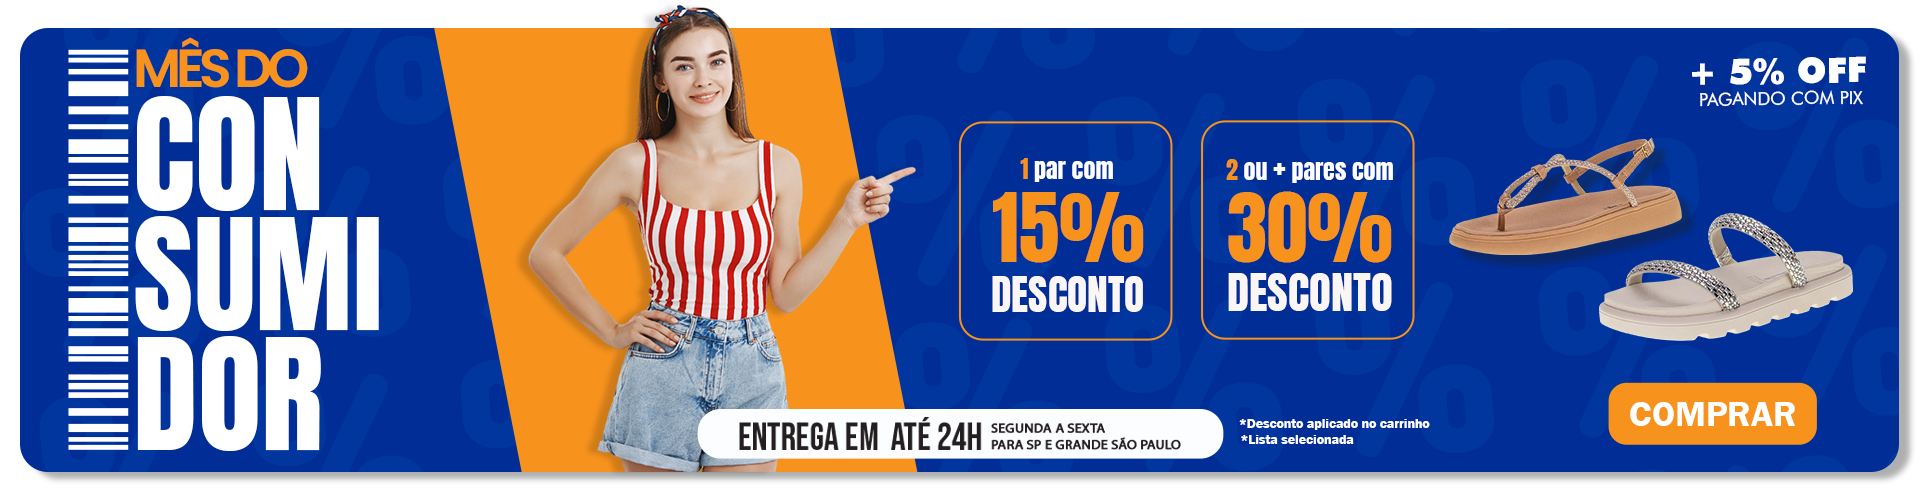 Site Da Loja Clovis Calçados Best Sale, SAVE 43% 